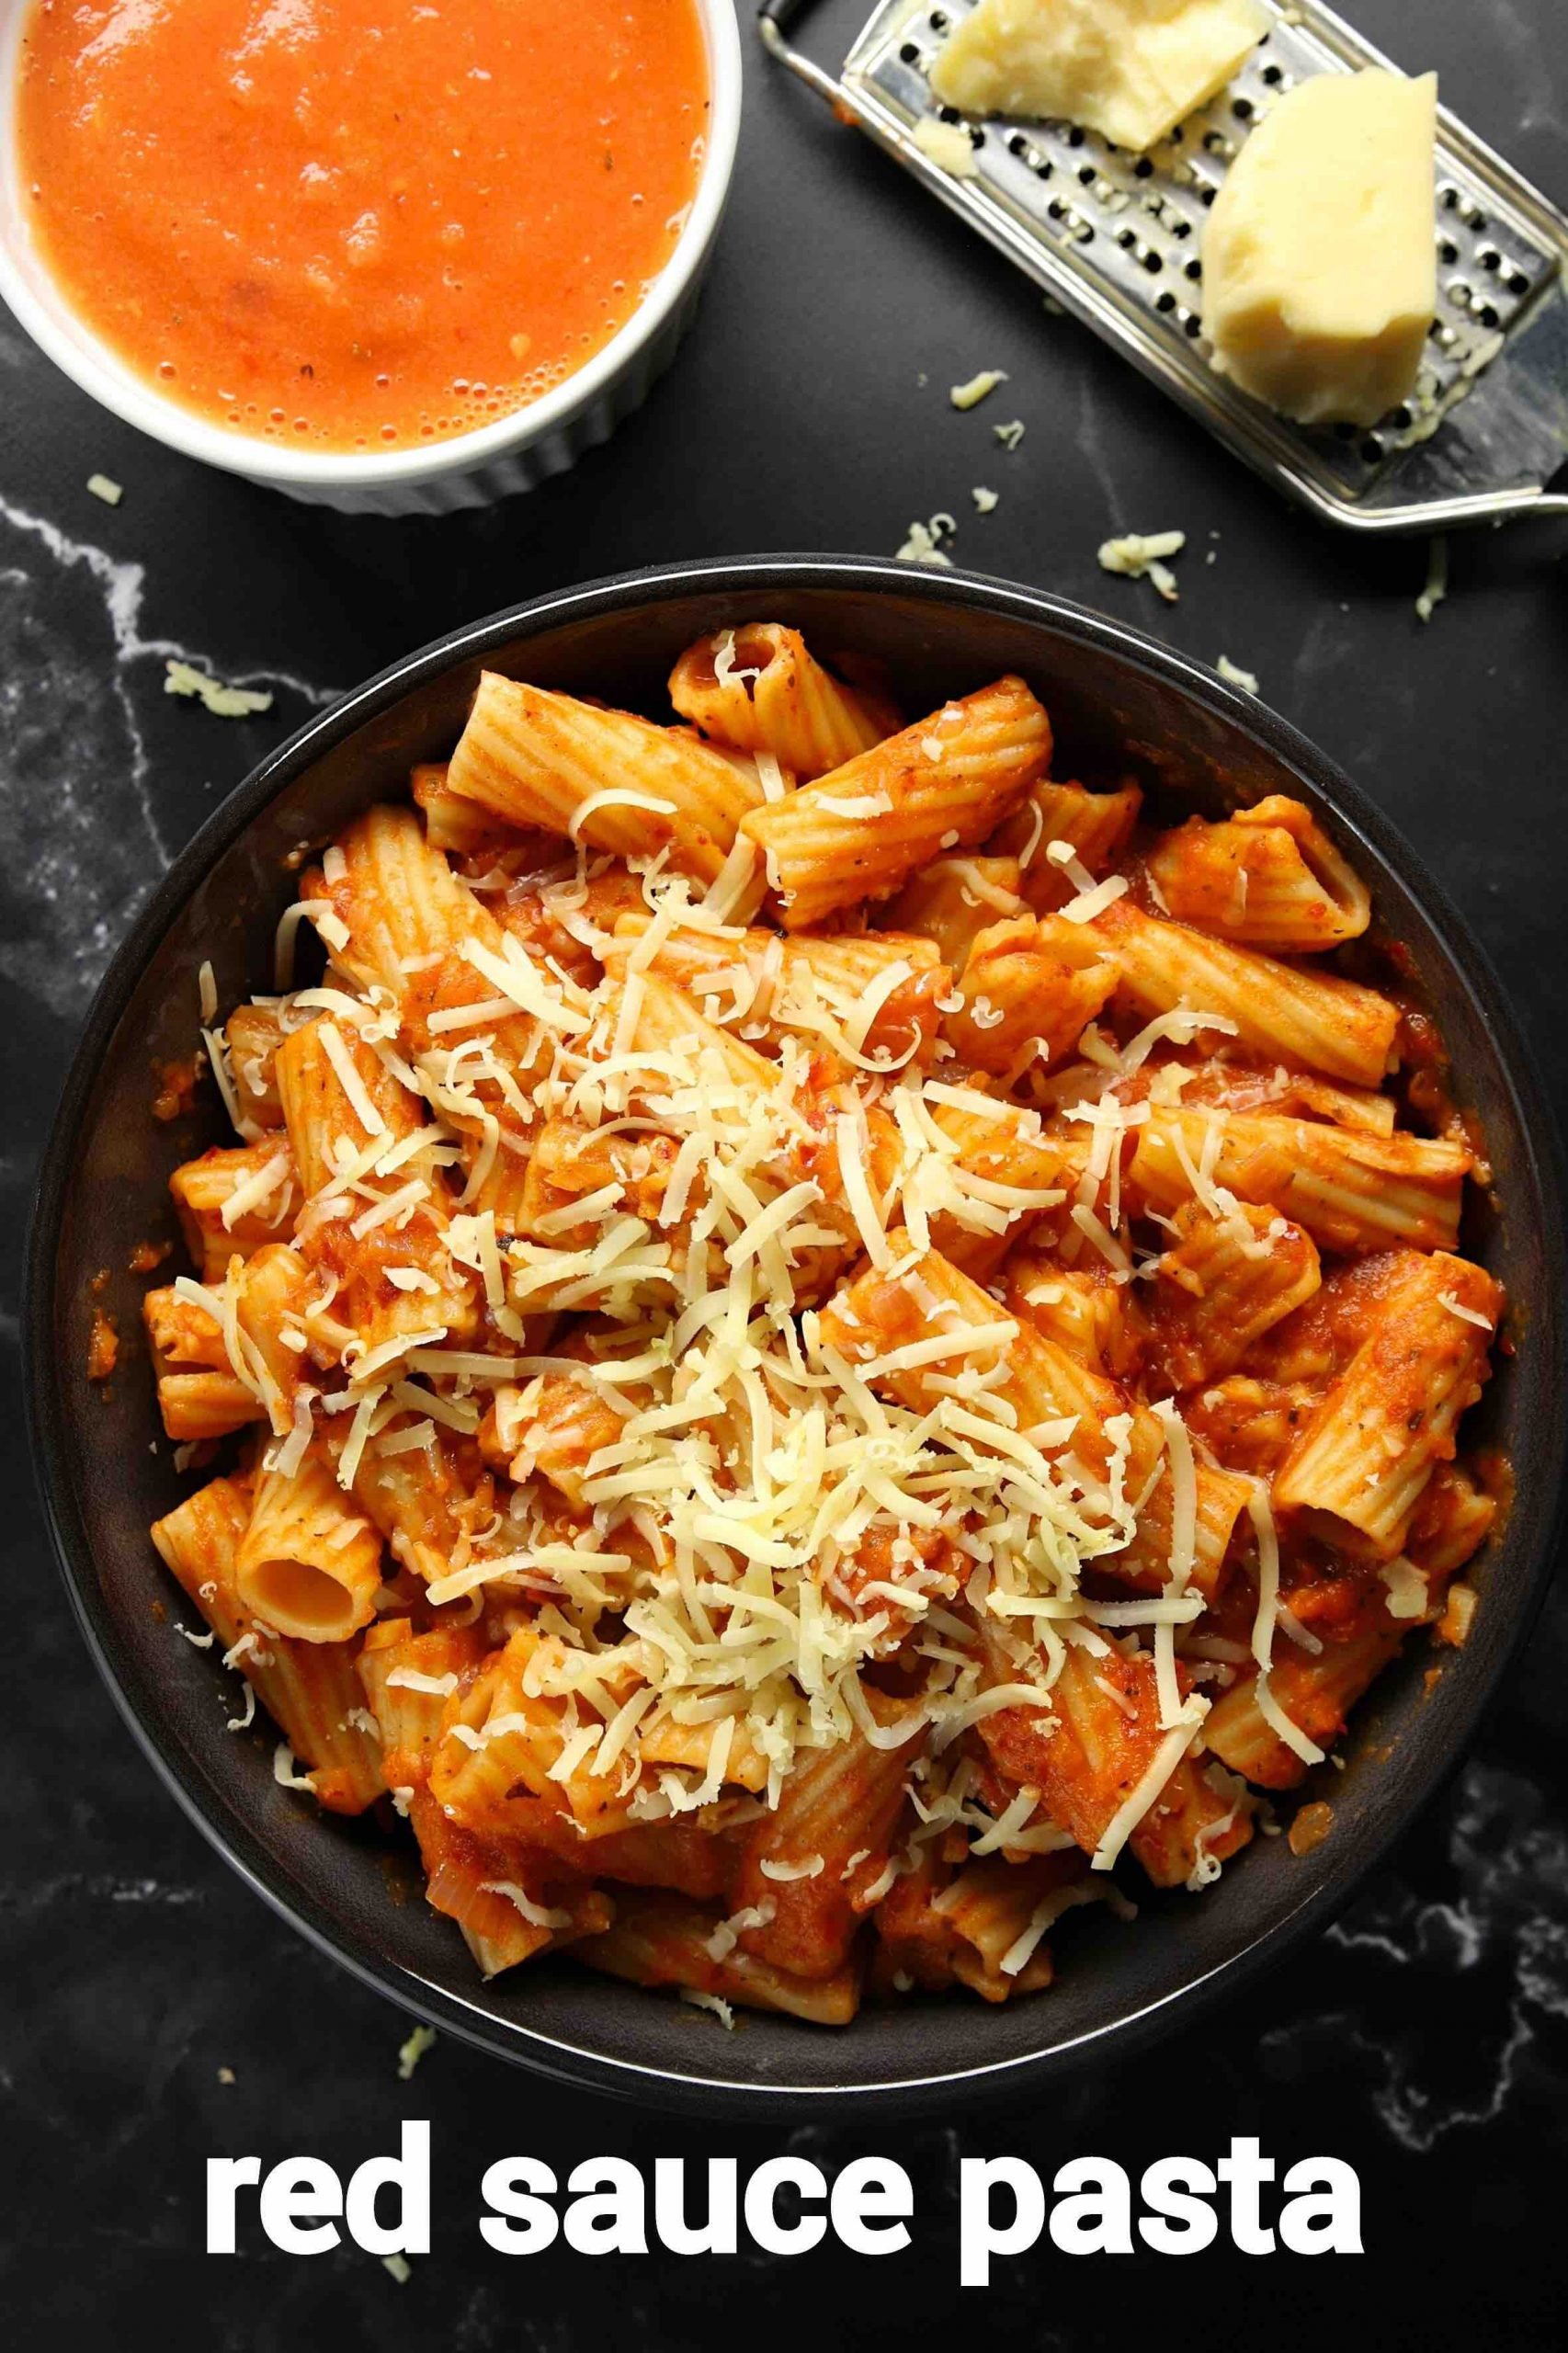 red sauce pasta recipe | how to make classic tomato sauce pasta recipe